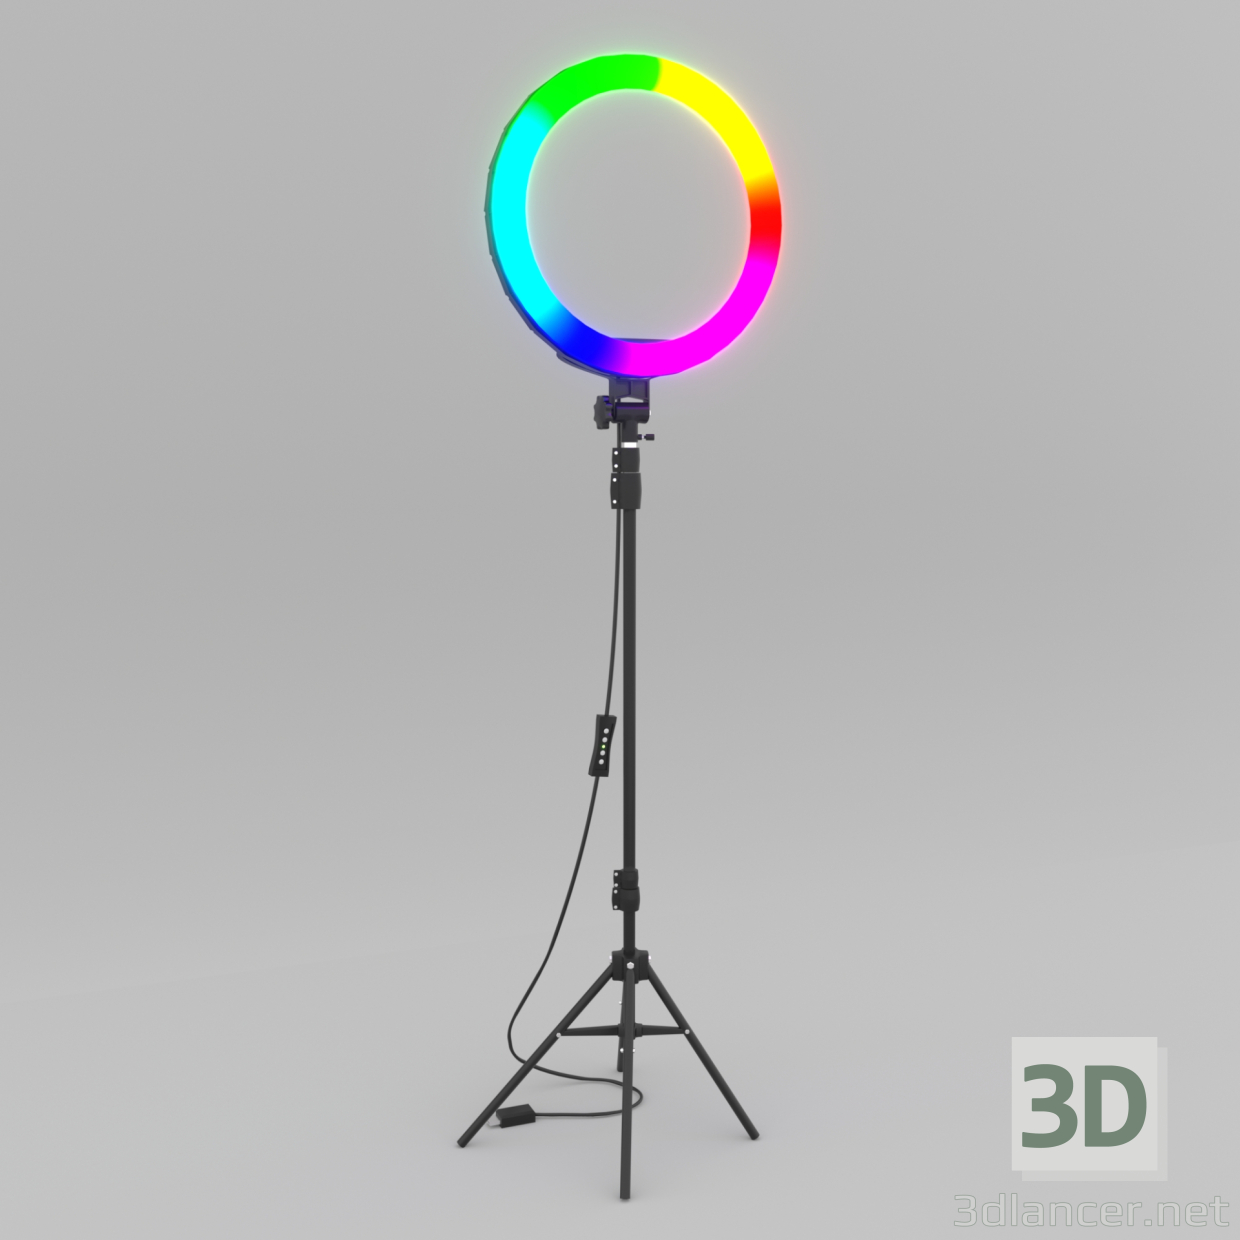 LED-Lampe 3D-Modell kaufen - Rendern